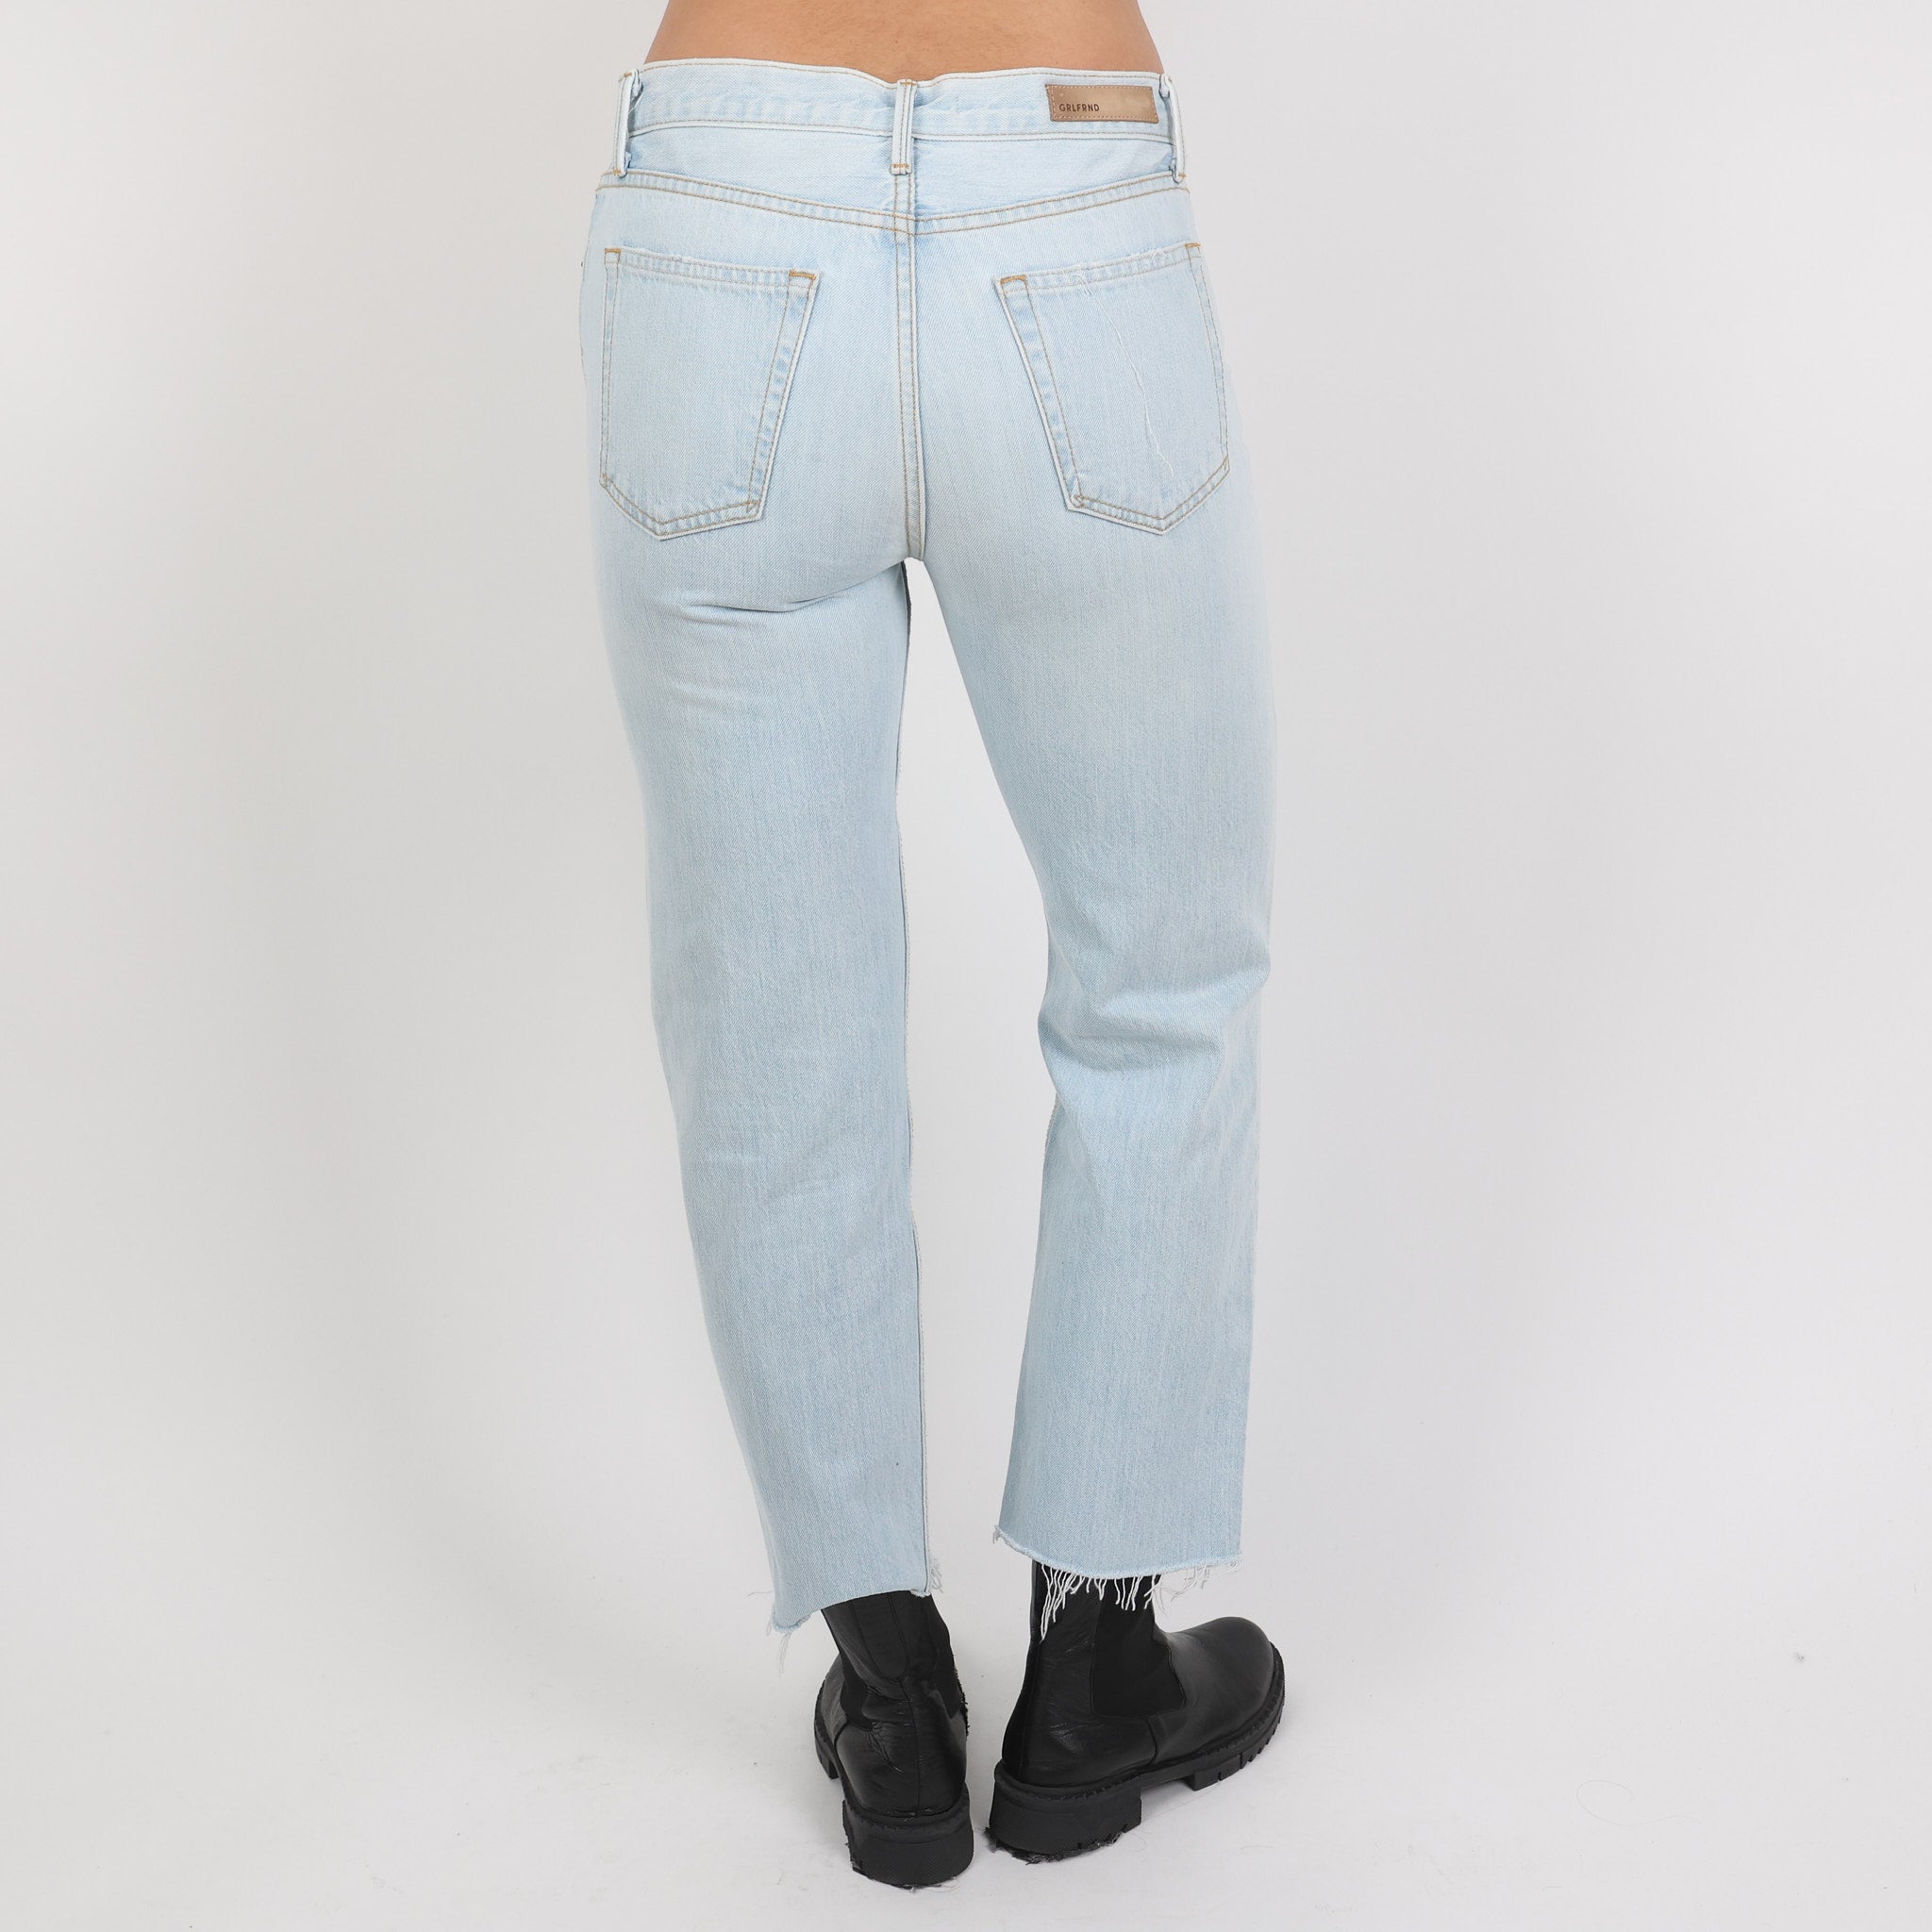 Jeans, Waist 28